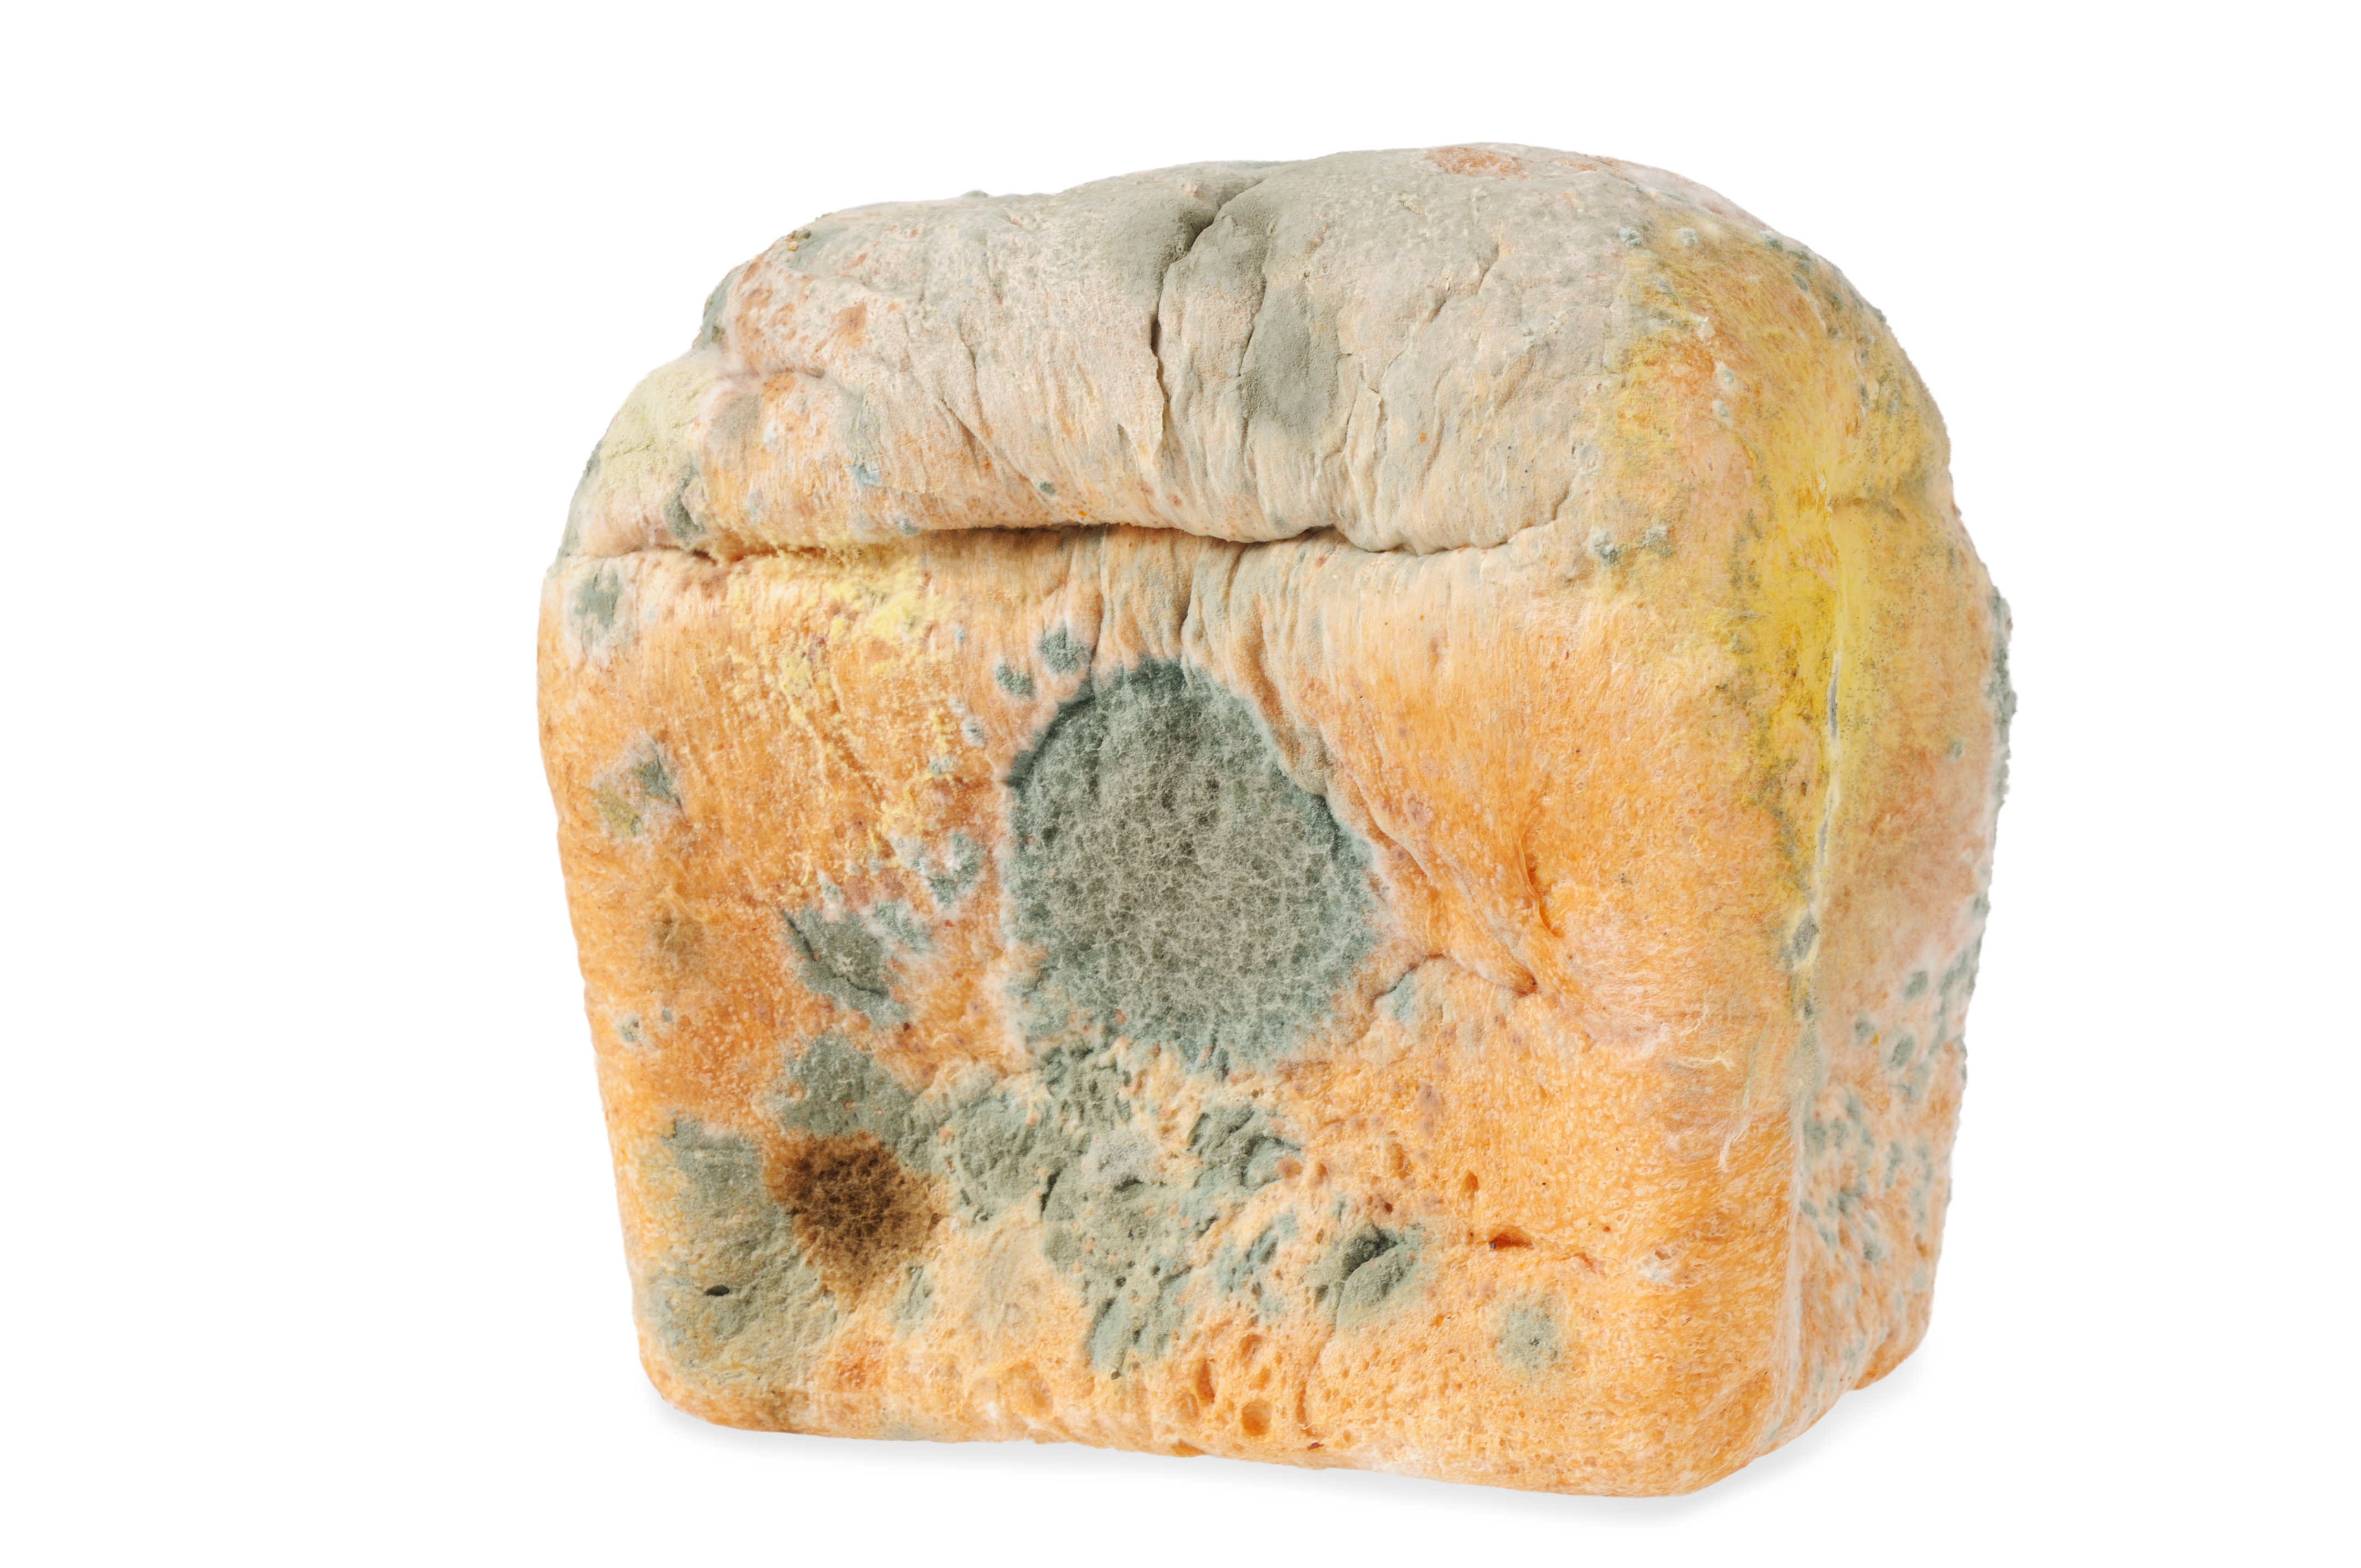 Moldy bread. Isolated